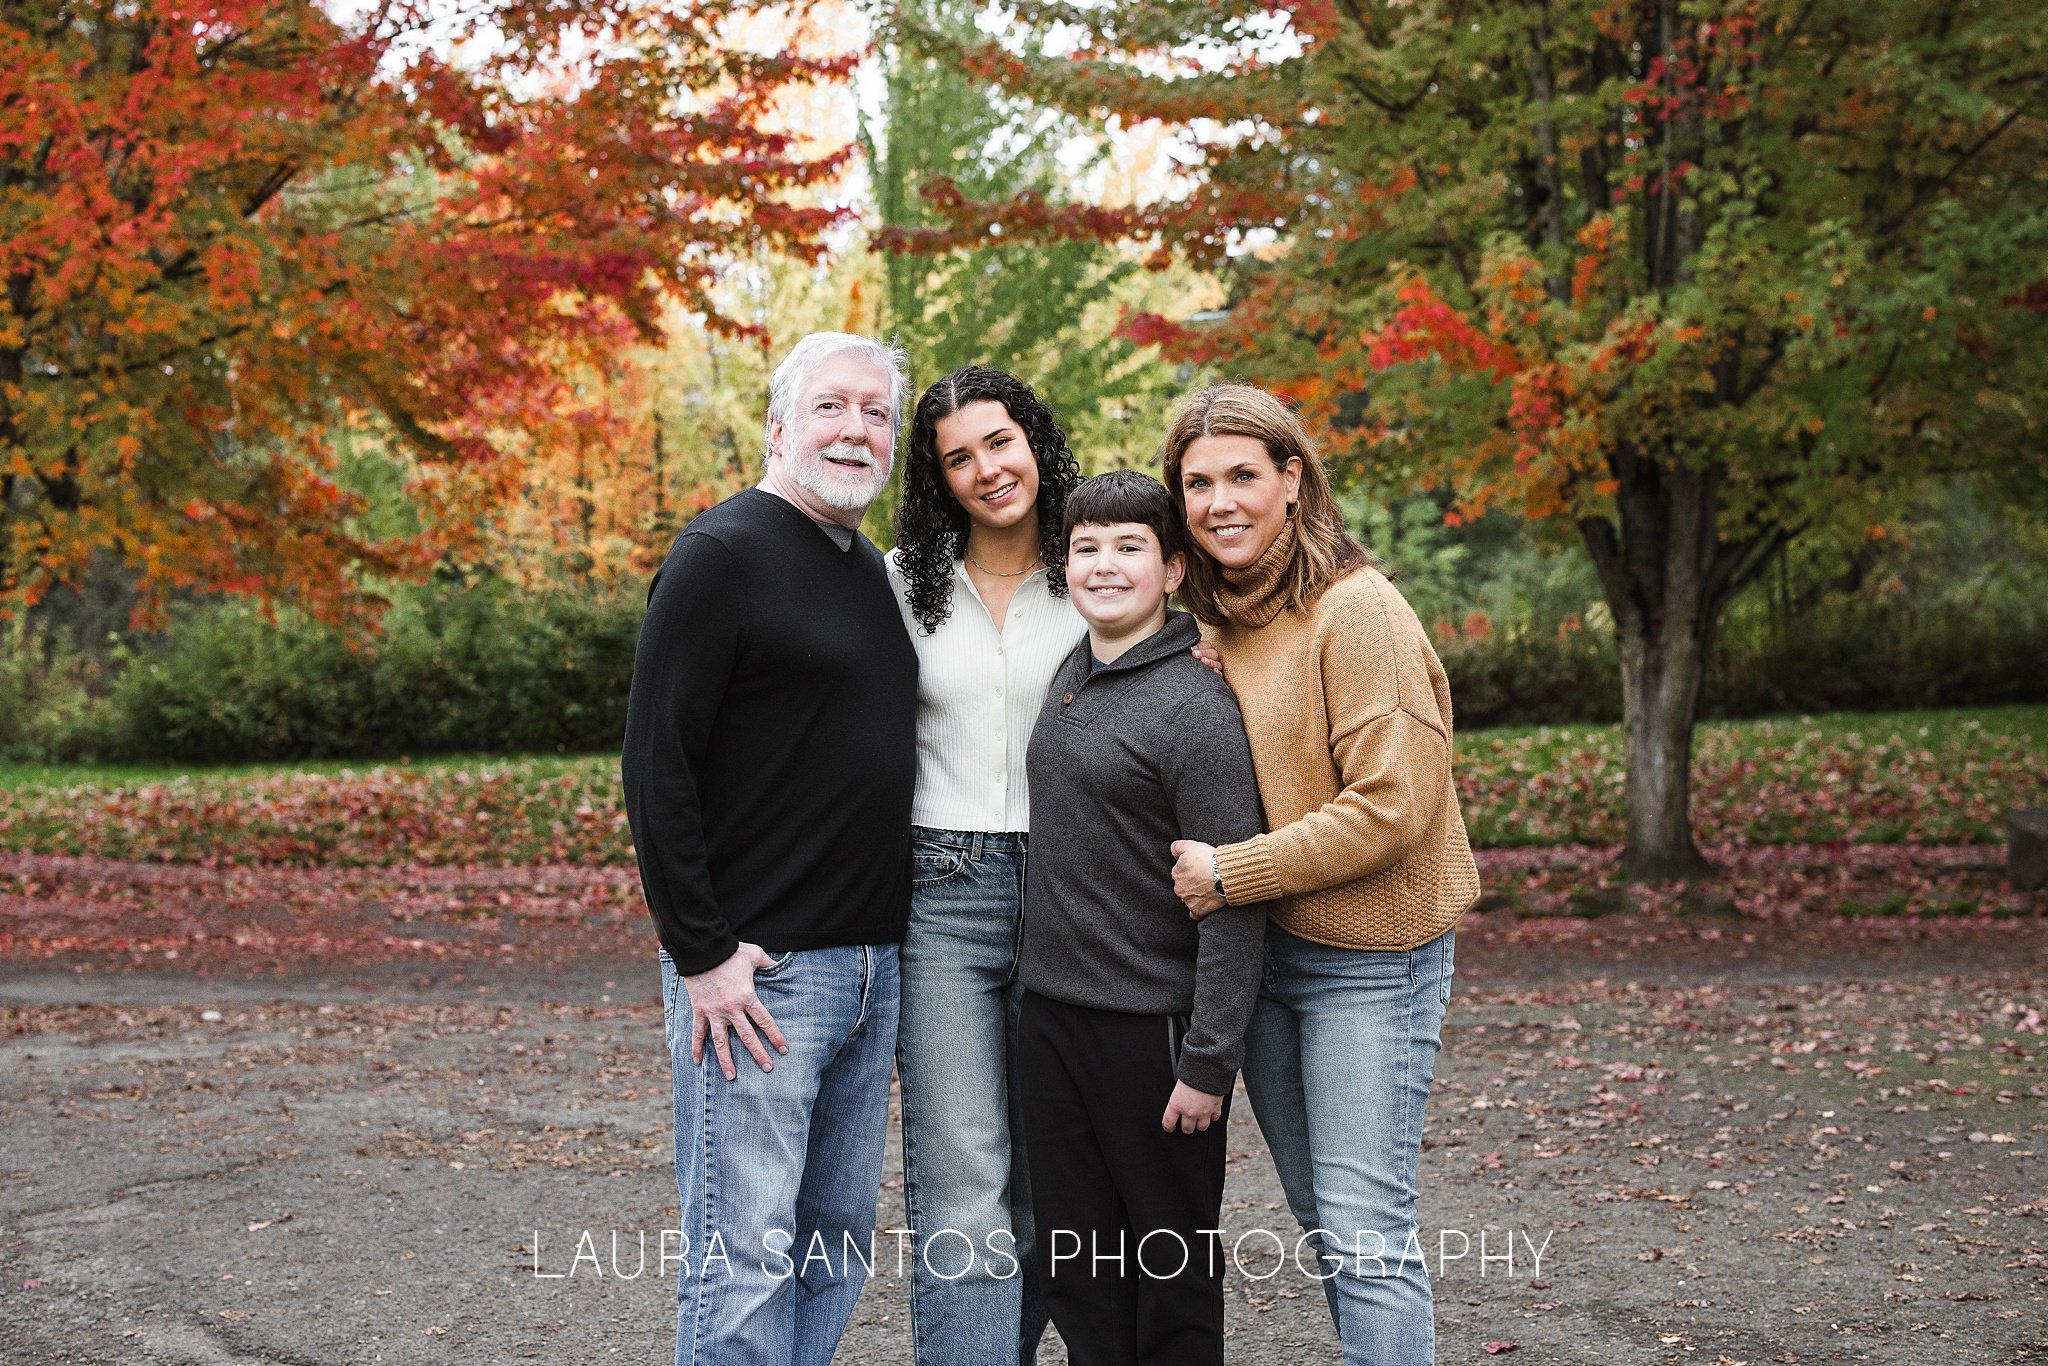 Laura Santos Photography Portland Oregon Family Photographer_4596.jpg